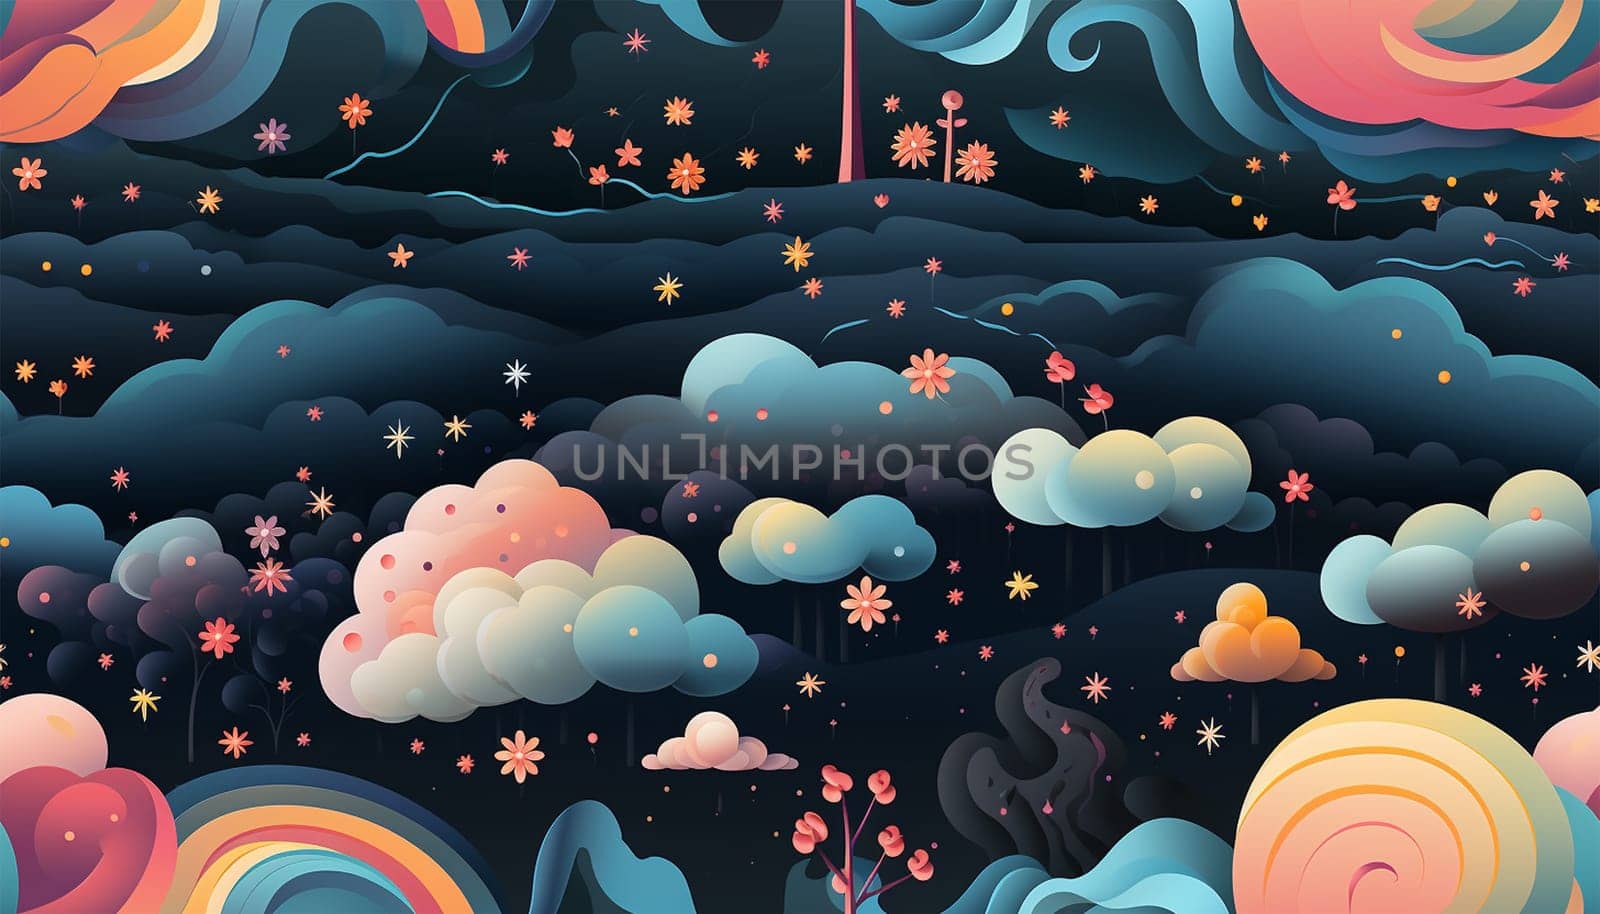 Unicorn design pattern landscape fantasy. Seamless kids princess style and unicorn illustration background pattern pastel